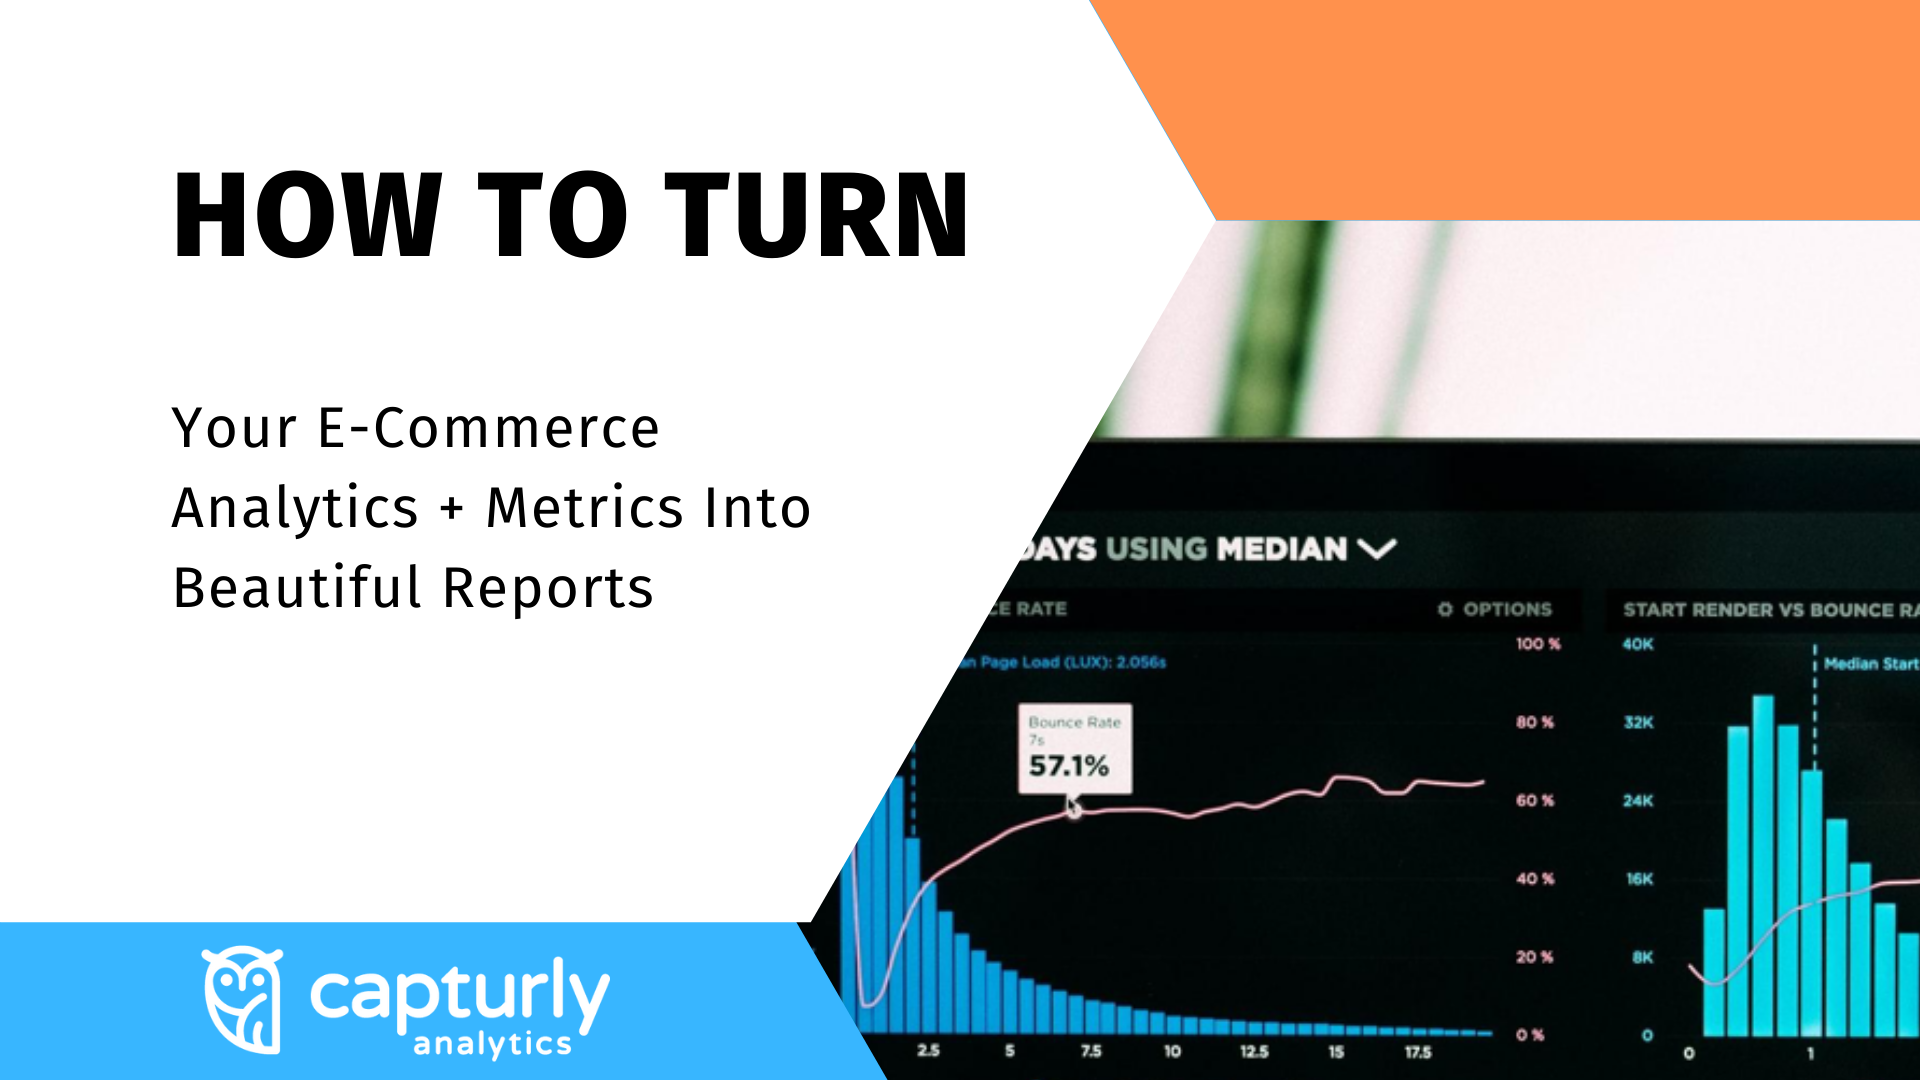 E-commerce analytics and metrics